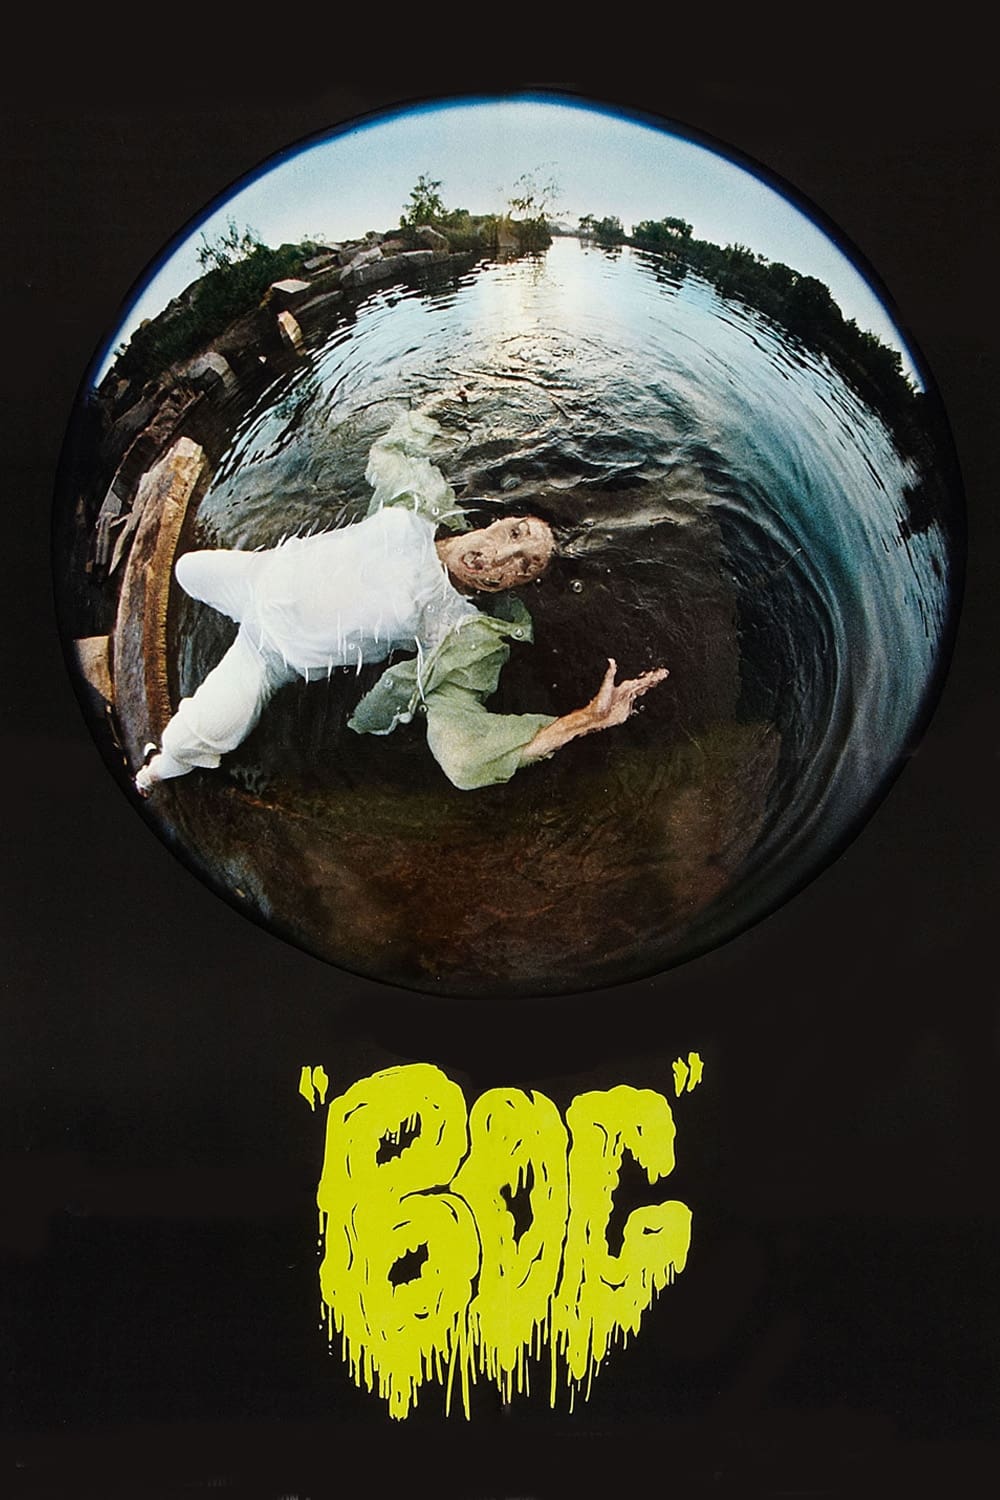 Bog (1979)